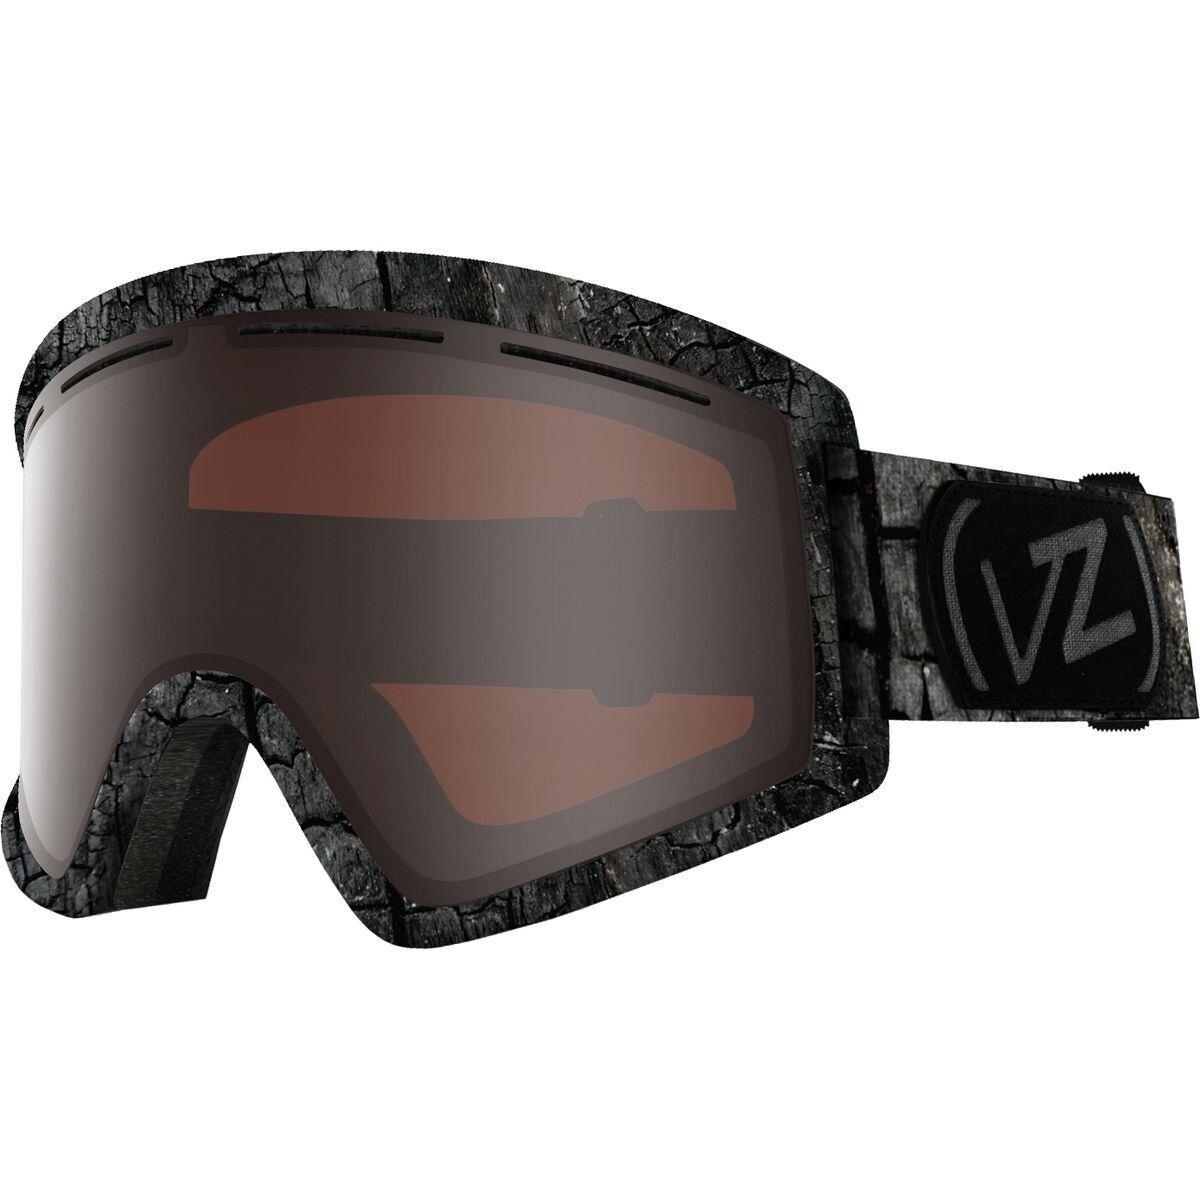 Vonzipper Cleaver Adult Ski / Snowboard Goggles Multiple Colors 